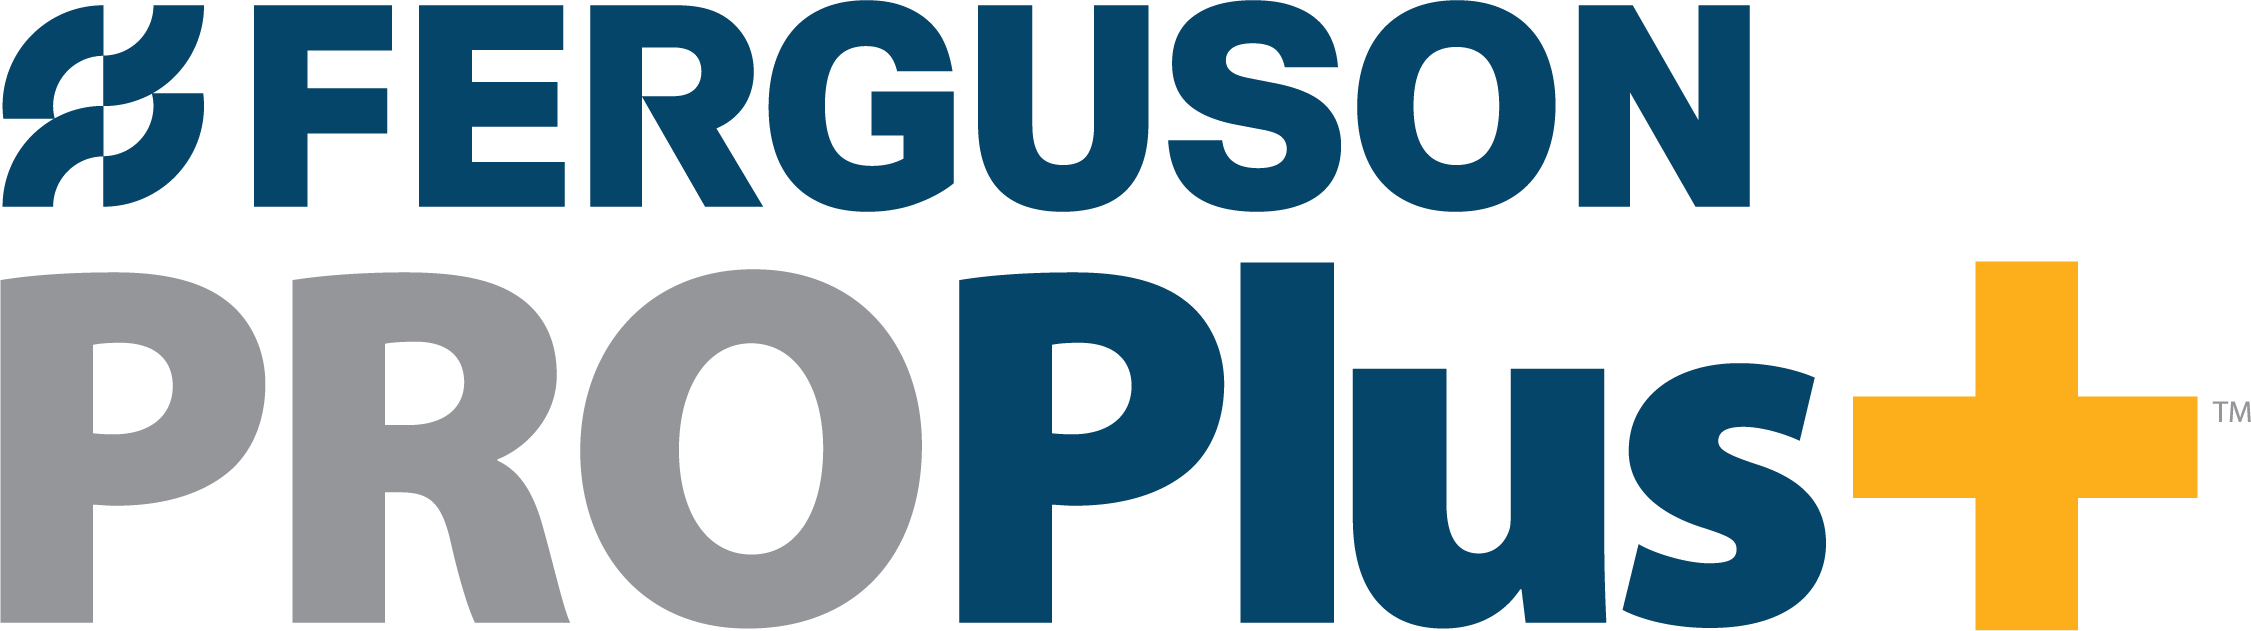 Ferguson PRO Plus logo.